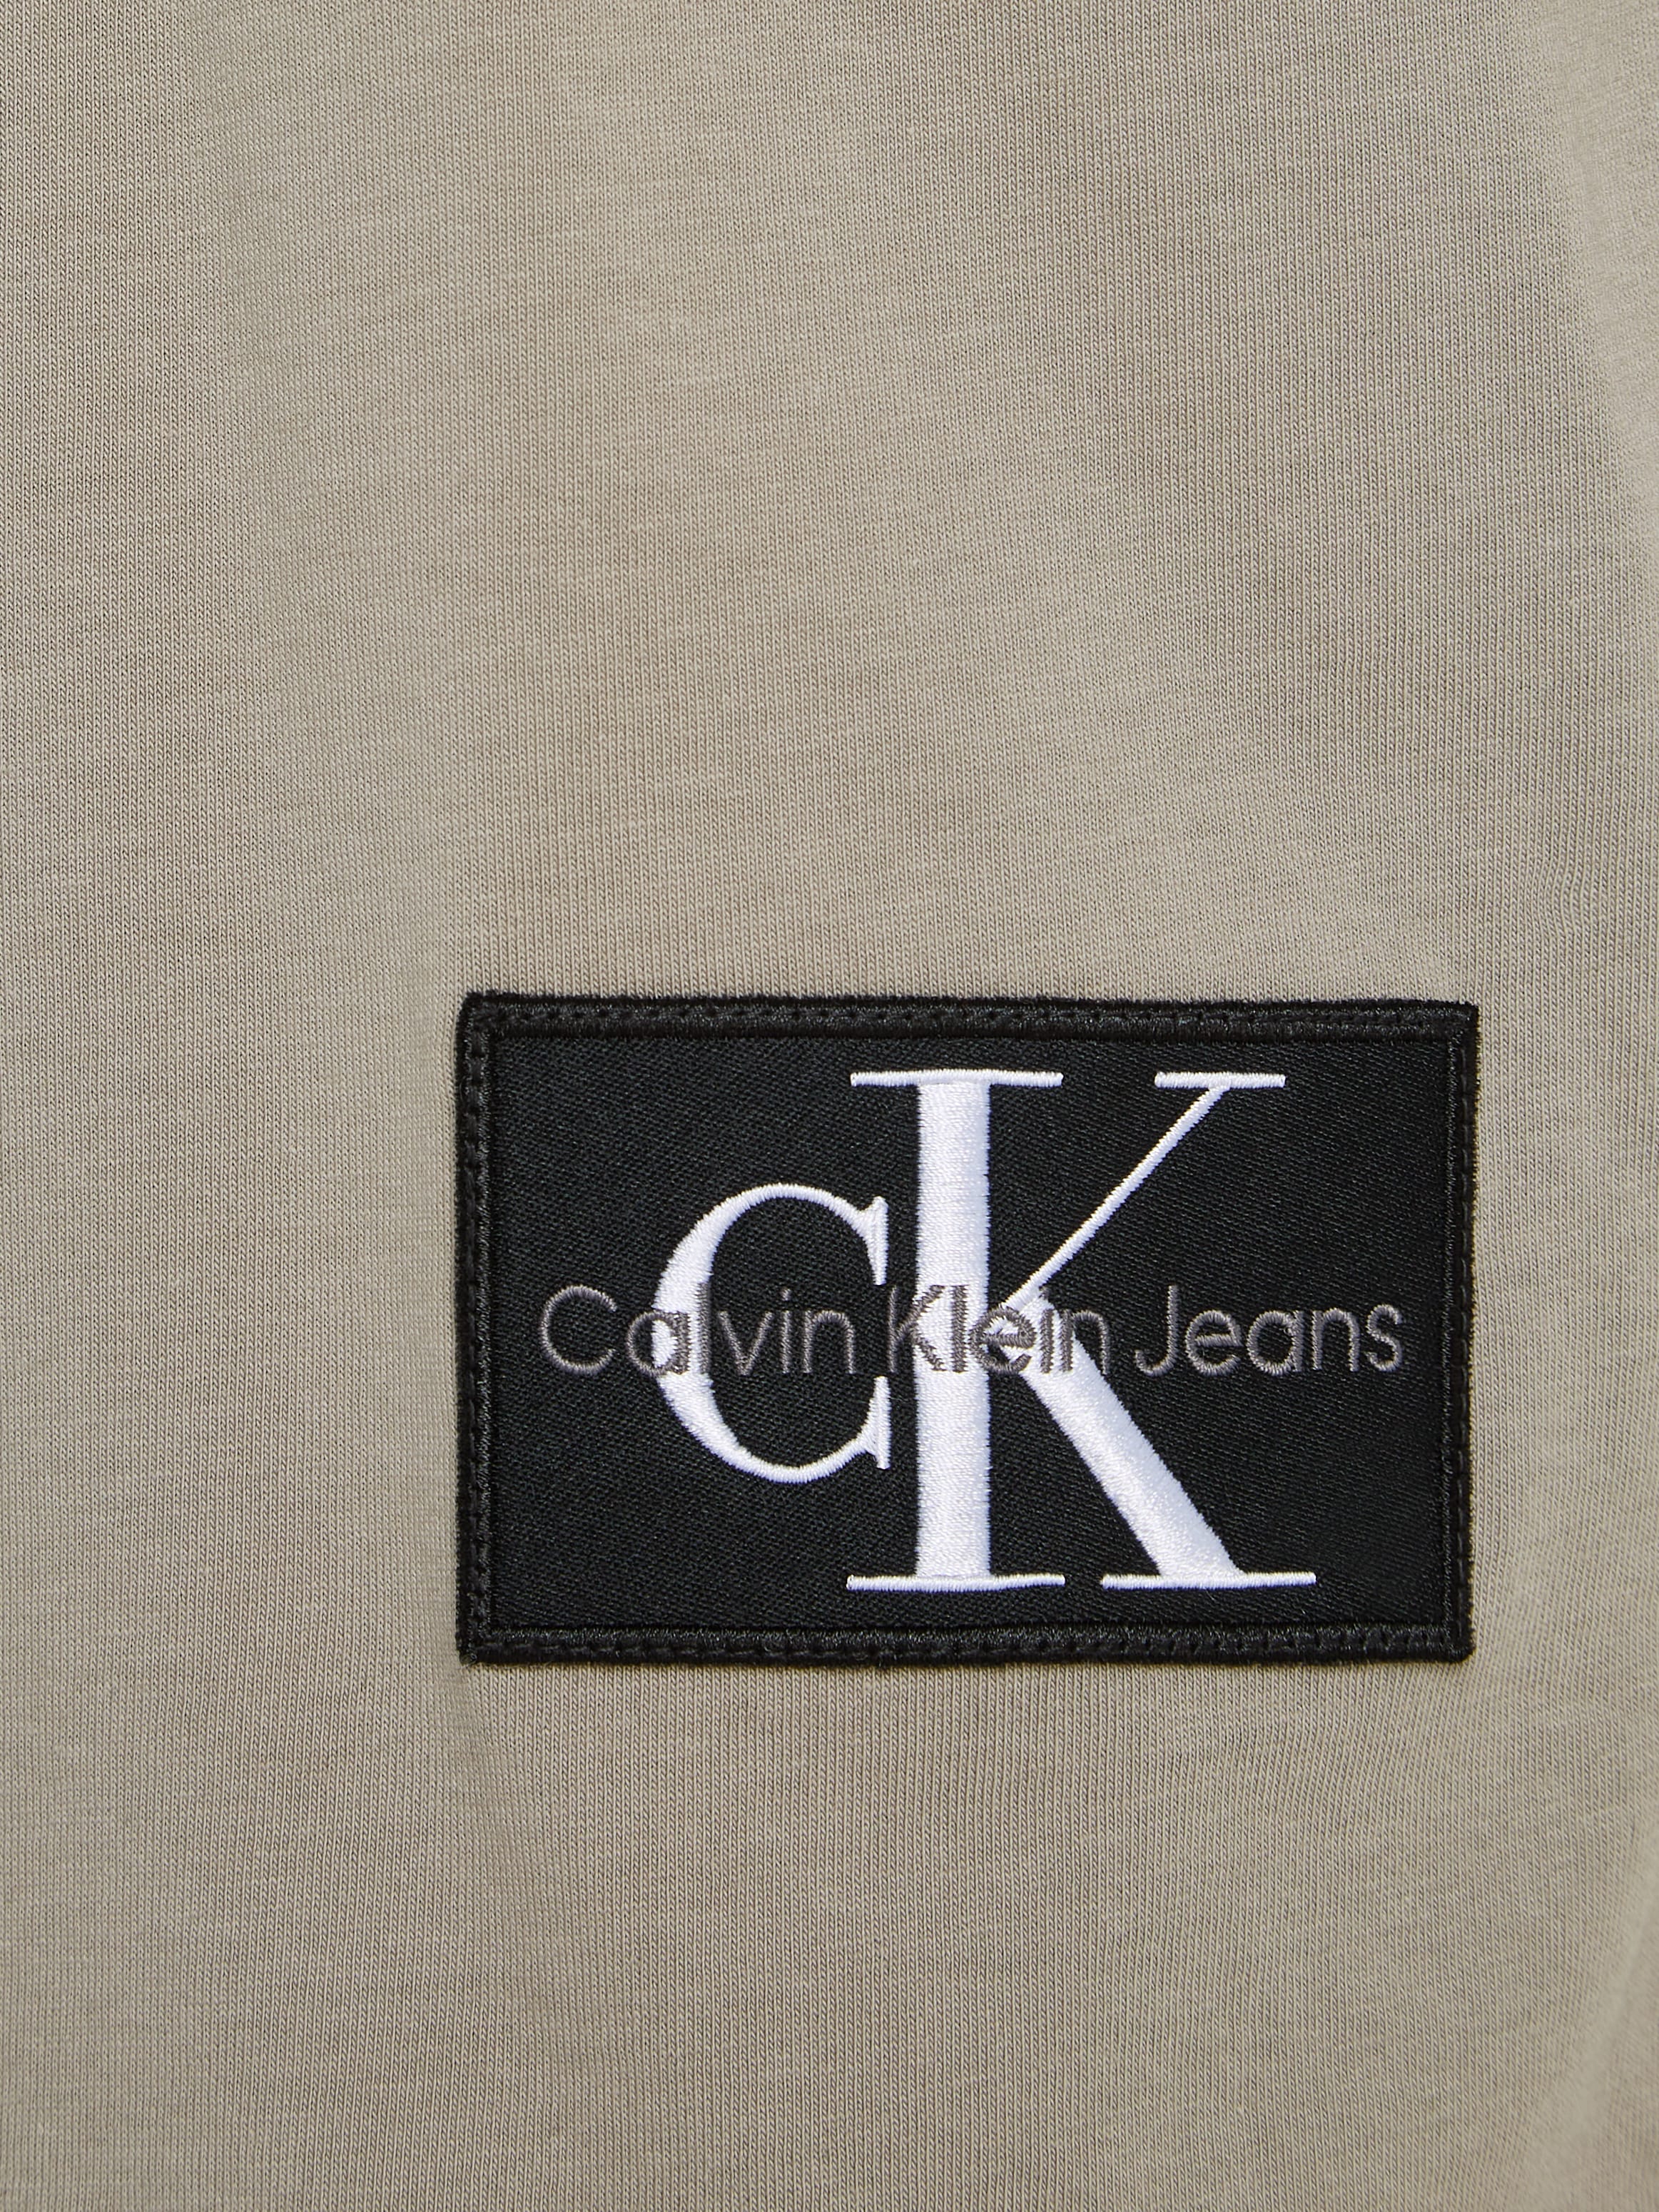 Calvin Klein Jeans mit ♕ bei UP »BADGE SLEEVE«, T-Shirt Logopatch TURN